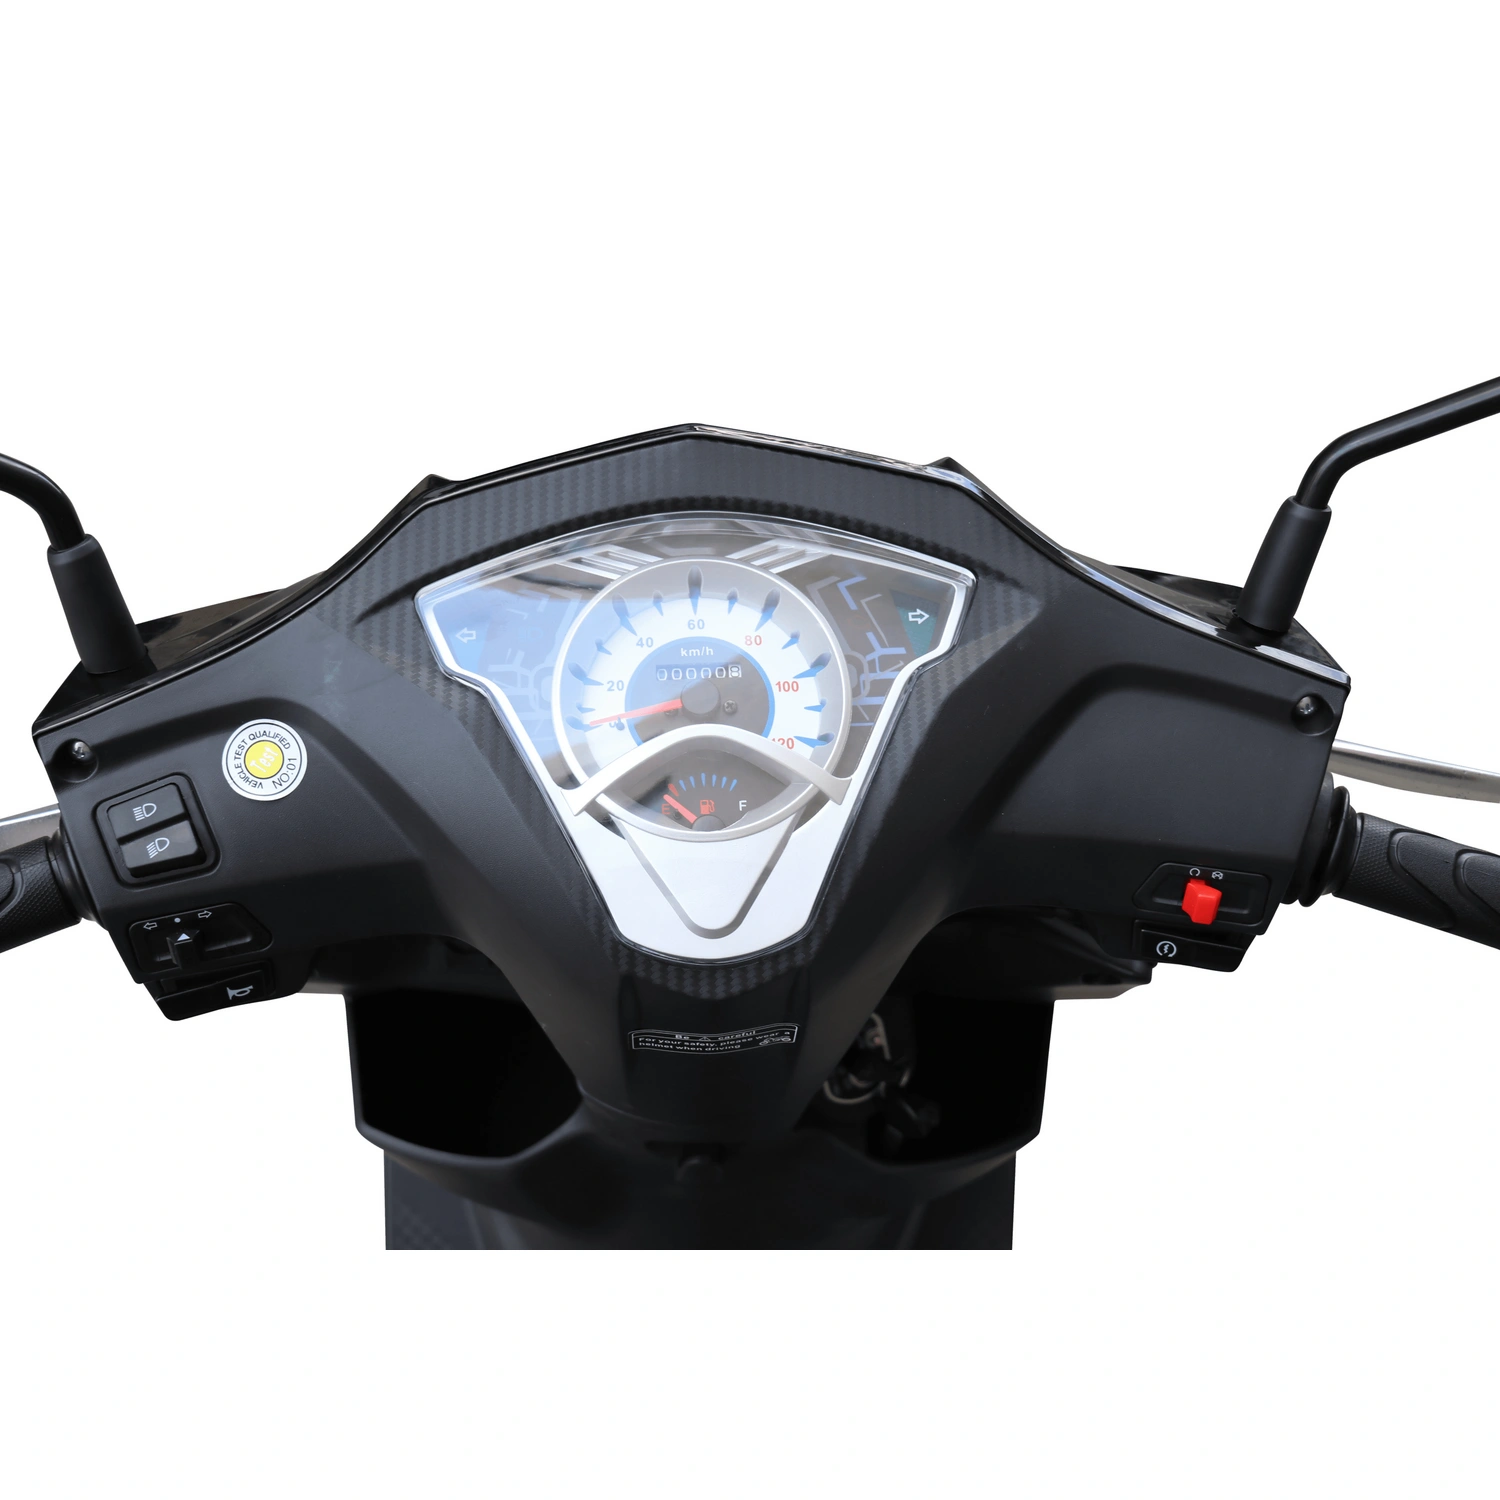 ALPHA MOTORS Motorroller »Topdrive 5 «, 125 85 cm³, Euro km/h